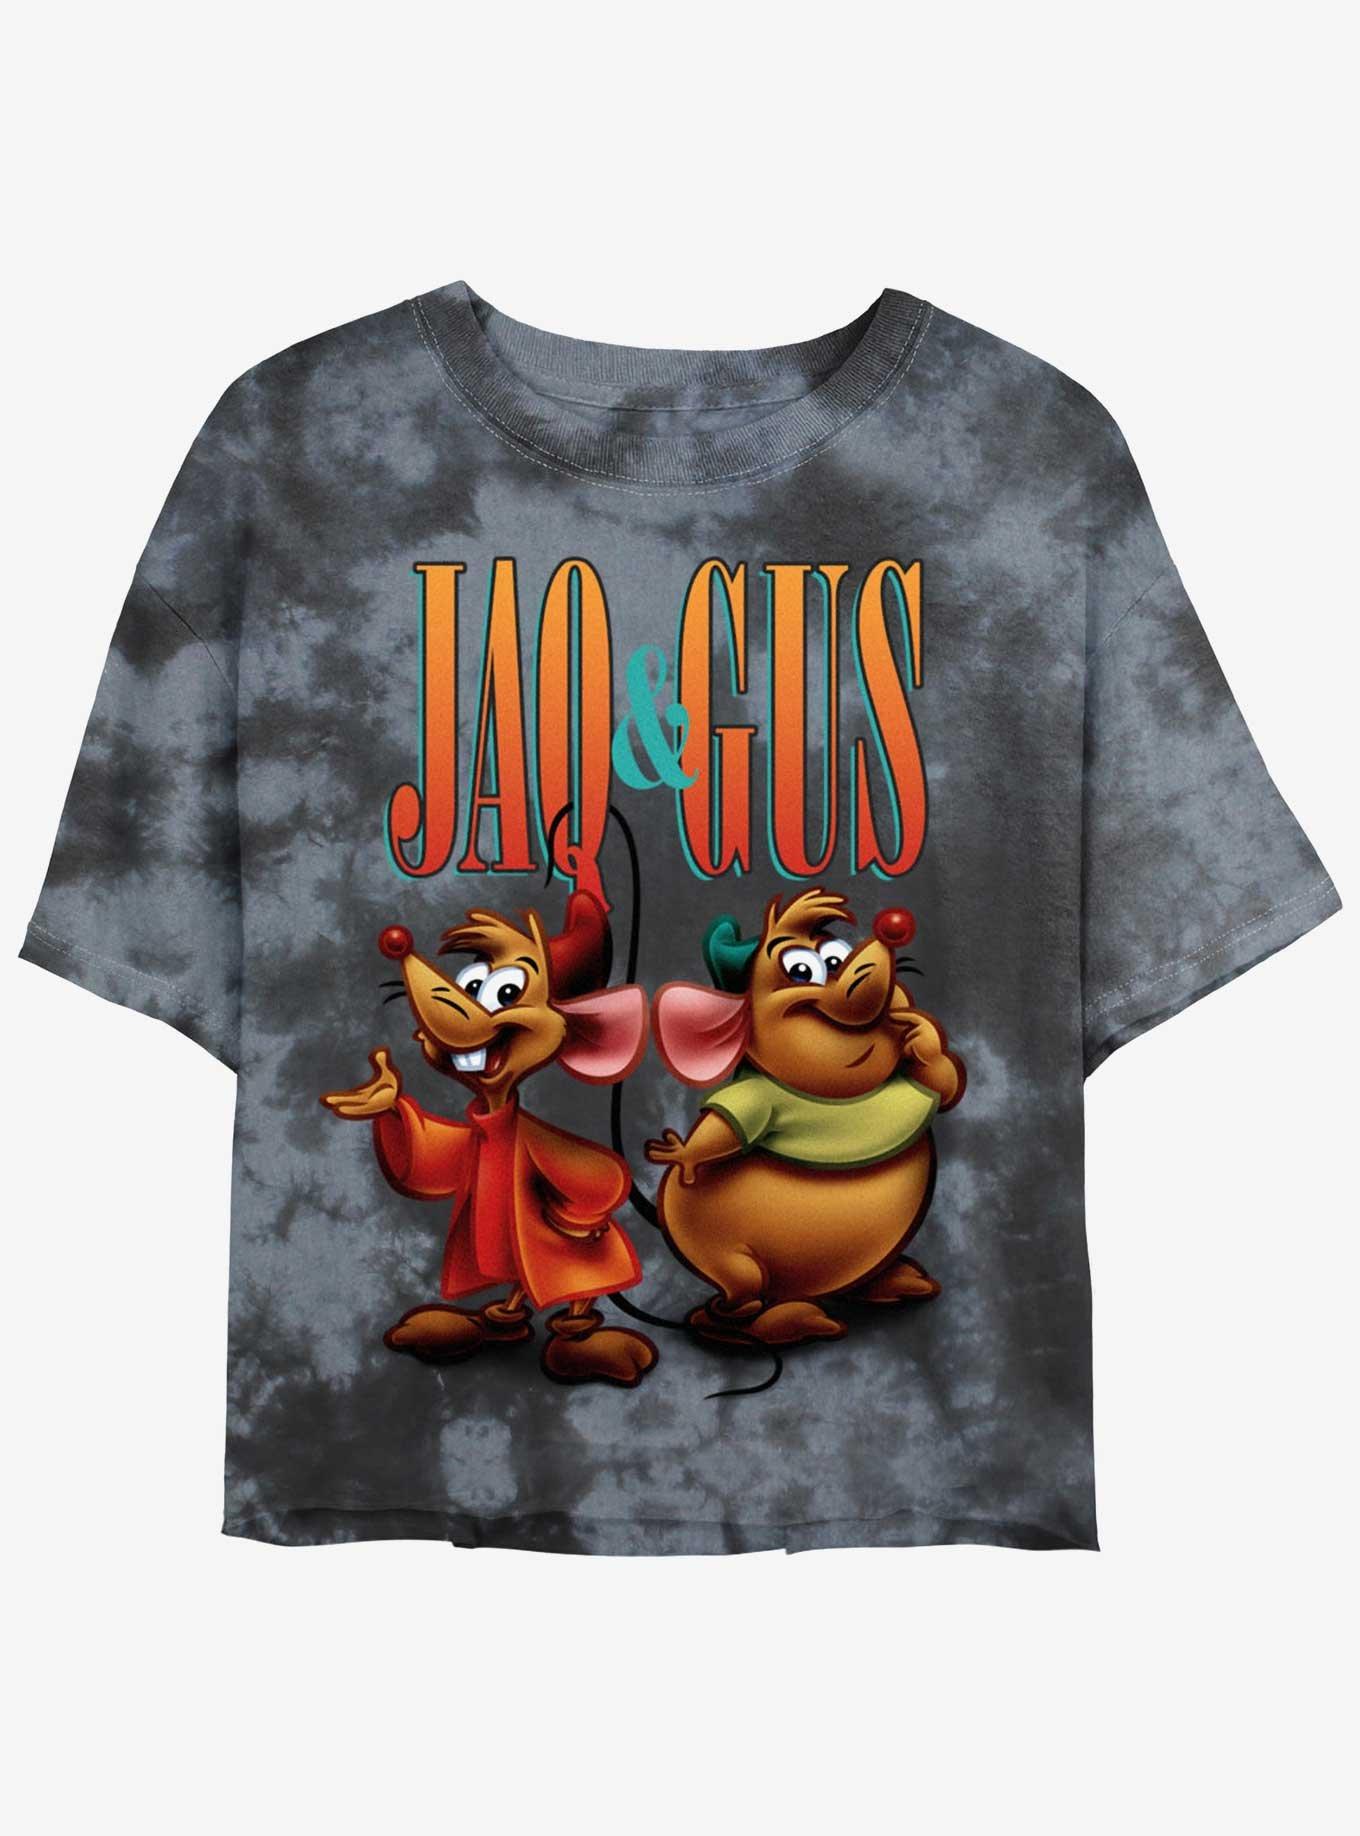 Disney Cinderella Gus And Jaq Pose Girls Tie-Dye Crop T-Shirt, BLKCHAR, hi-res